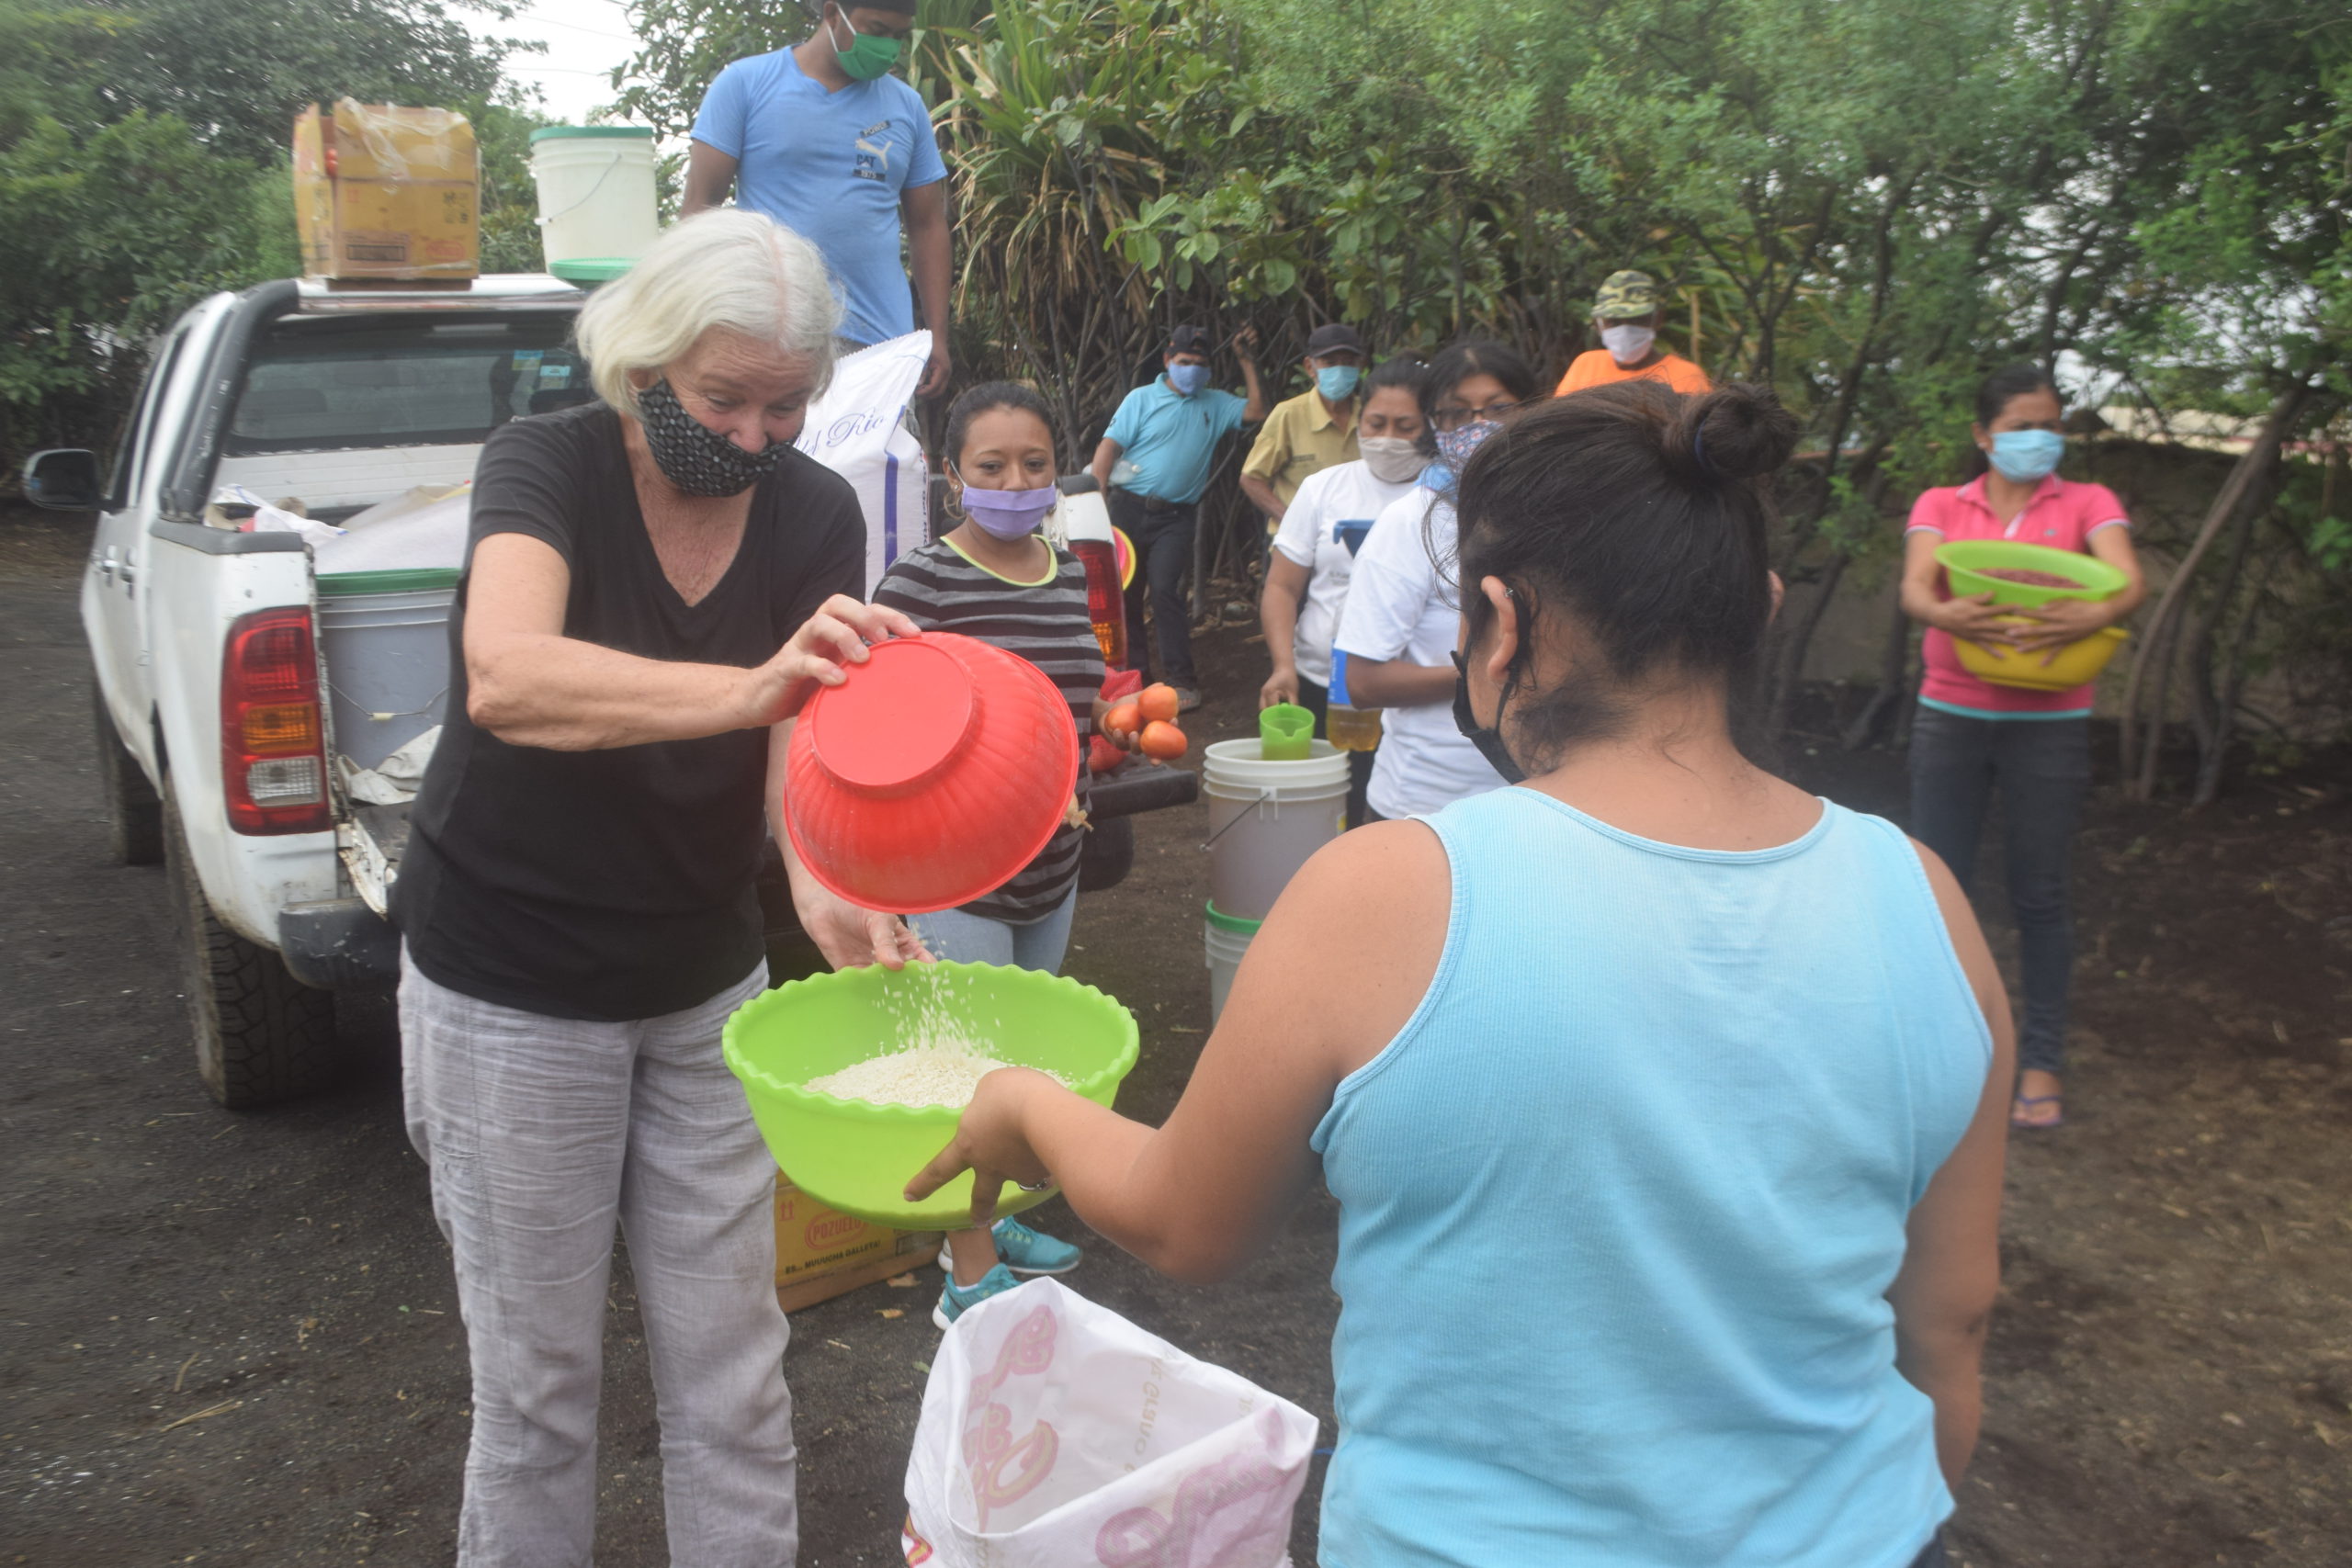 Paulette Helping Distribute Food.